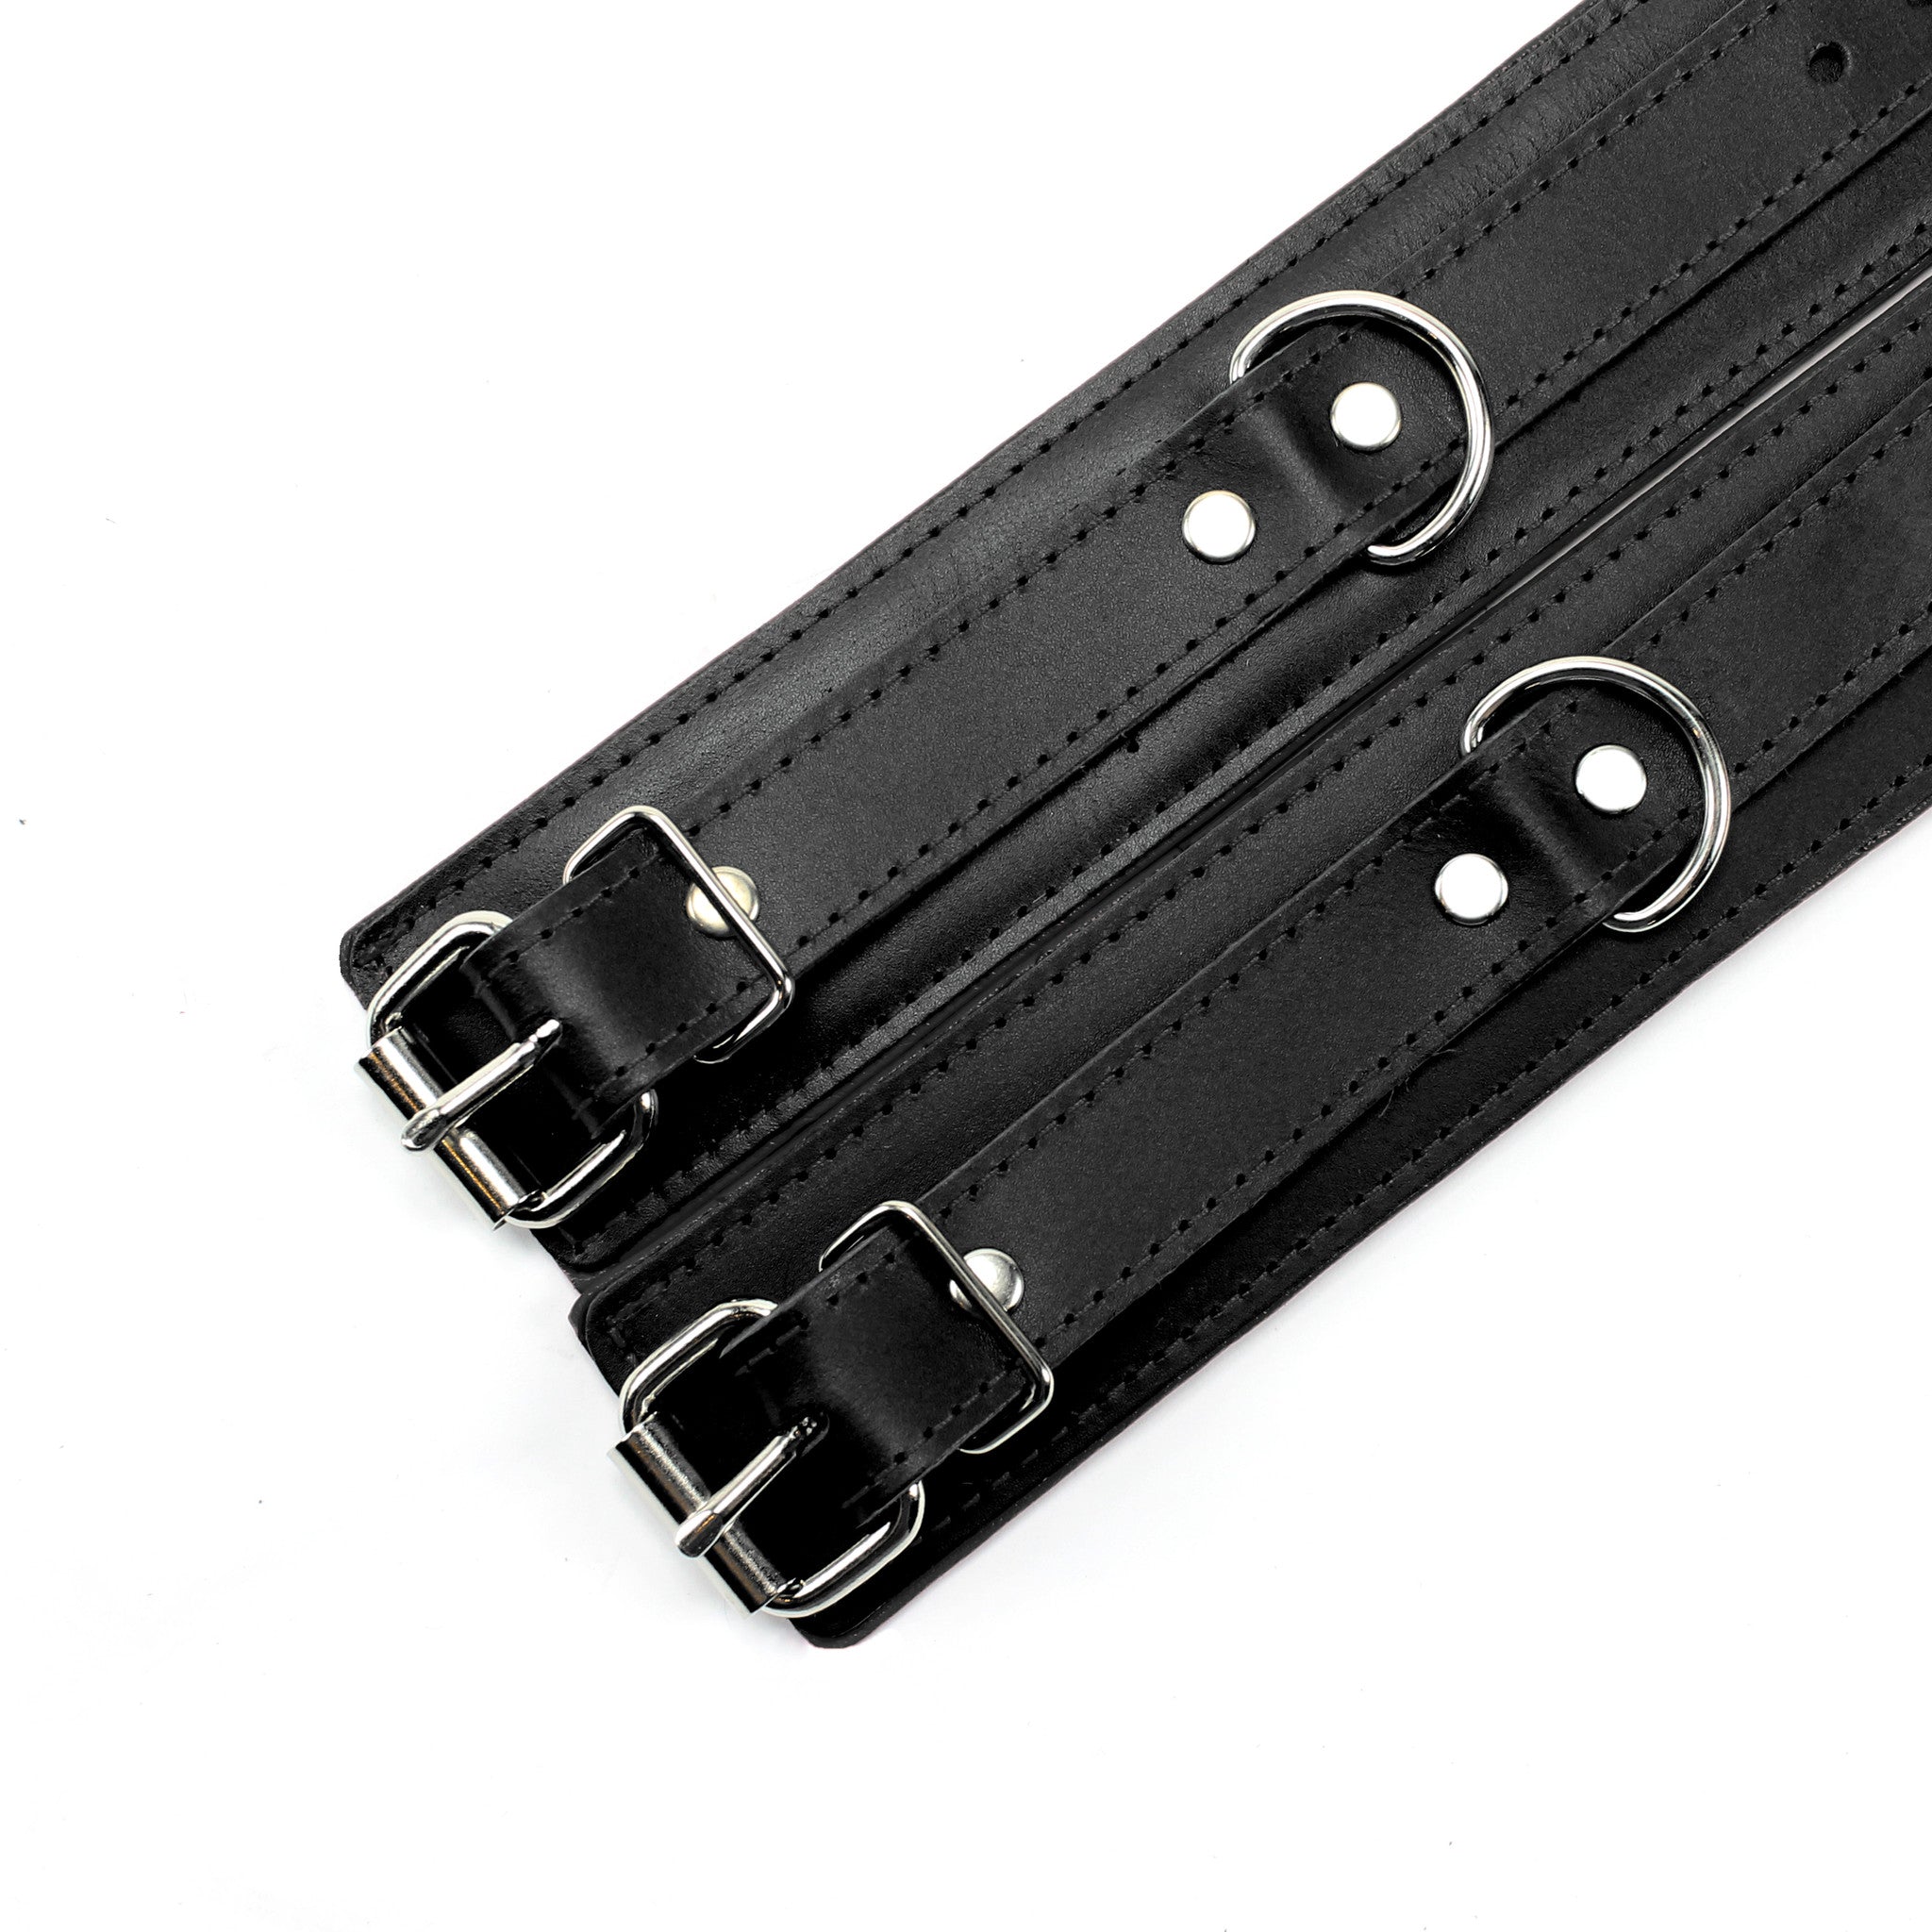 Padded leather bdsm cuffs black detail